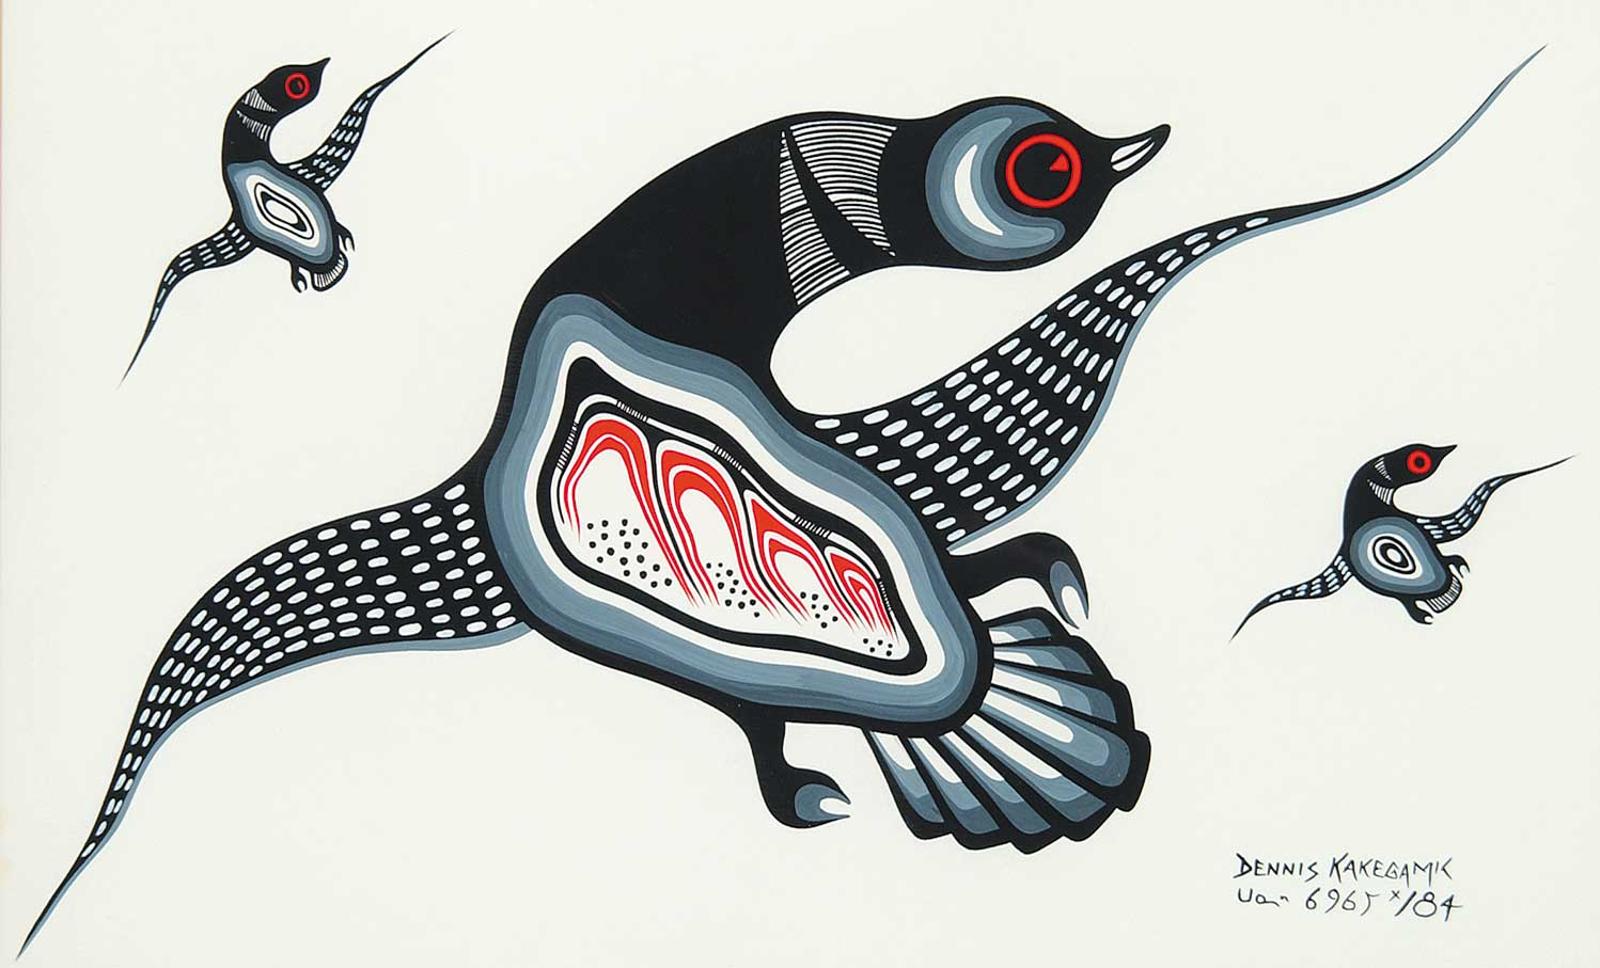 Dennis Kakegamic (1957) - Untitled - Three Birds